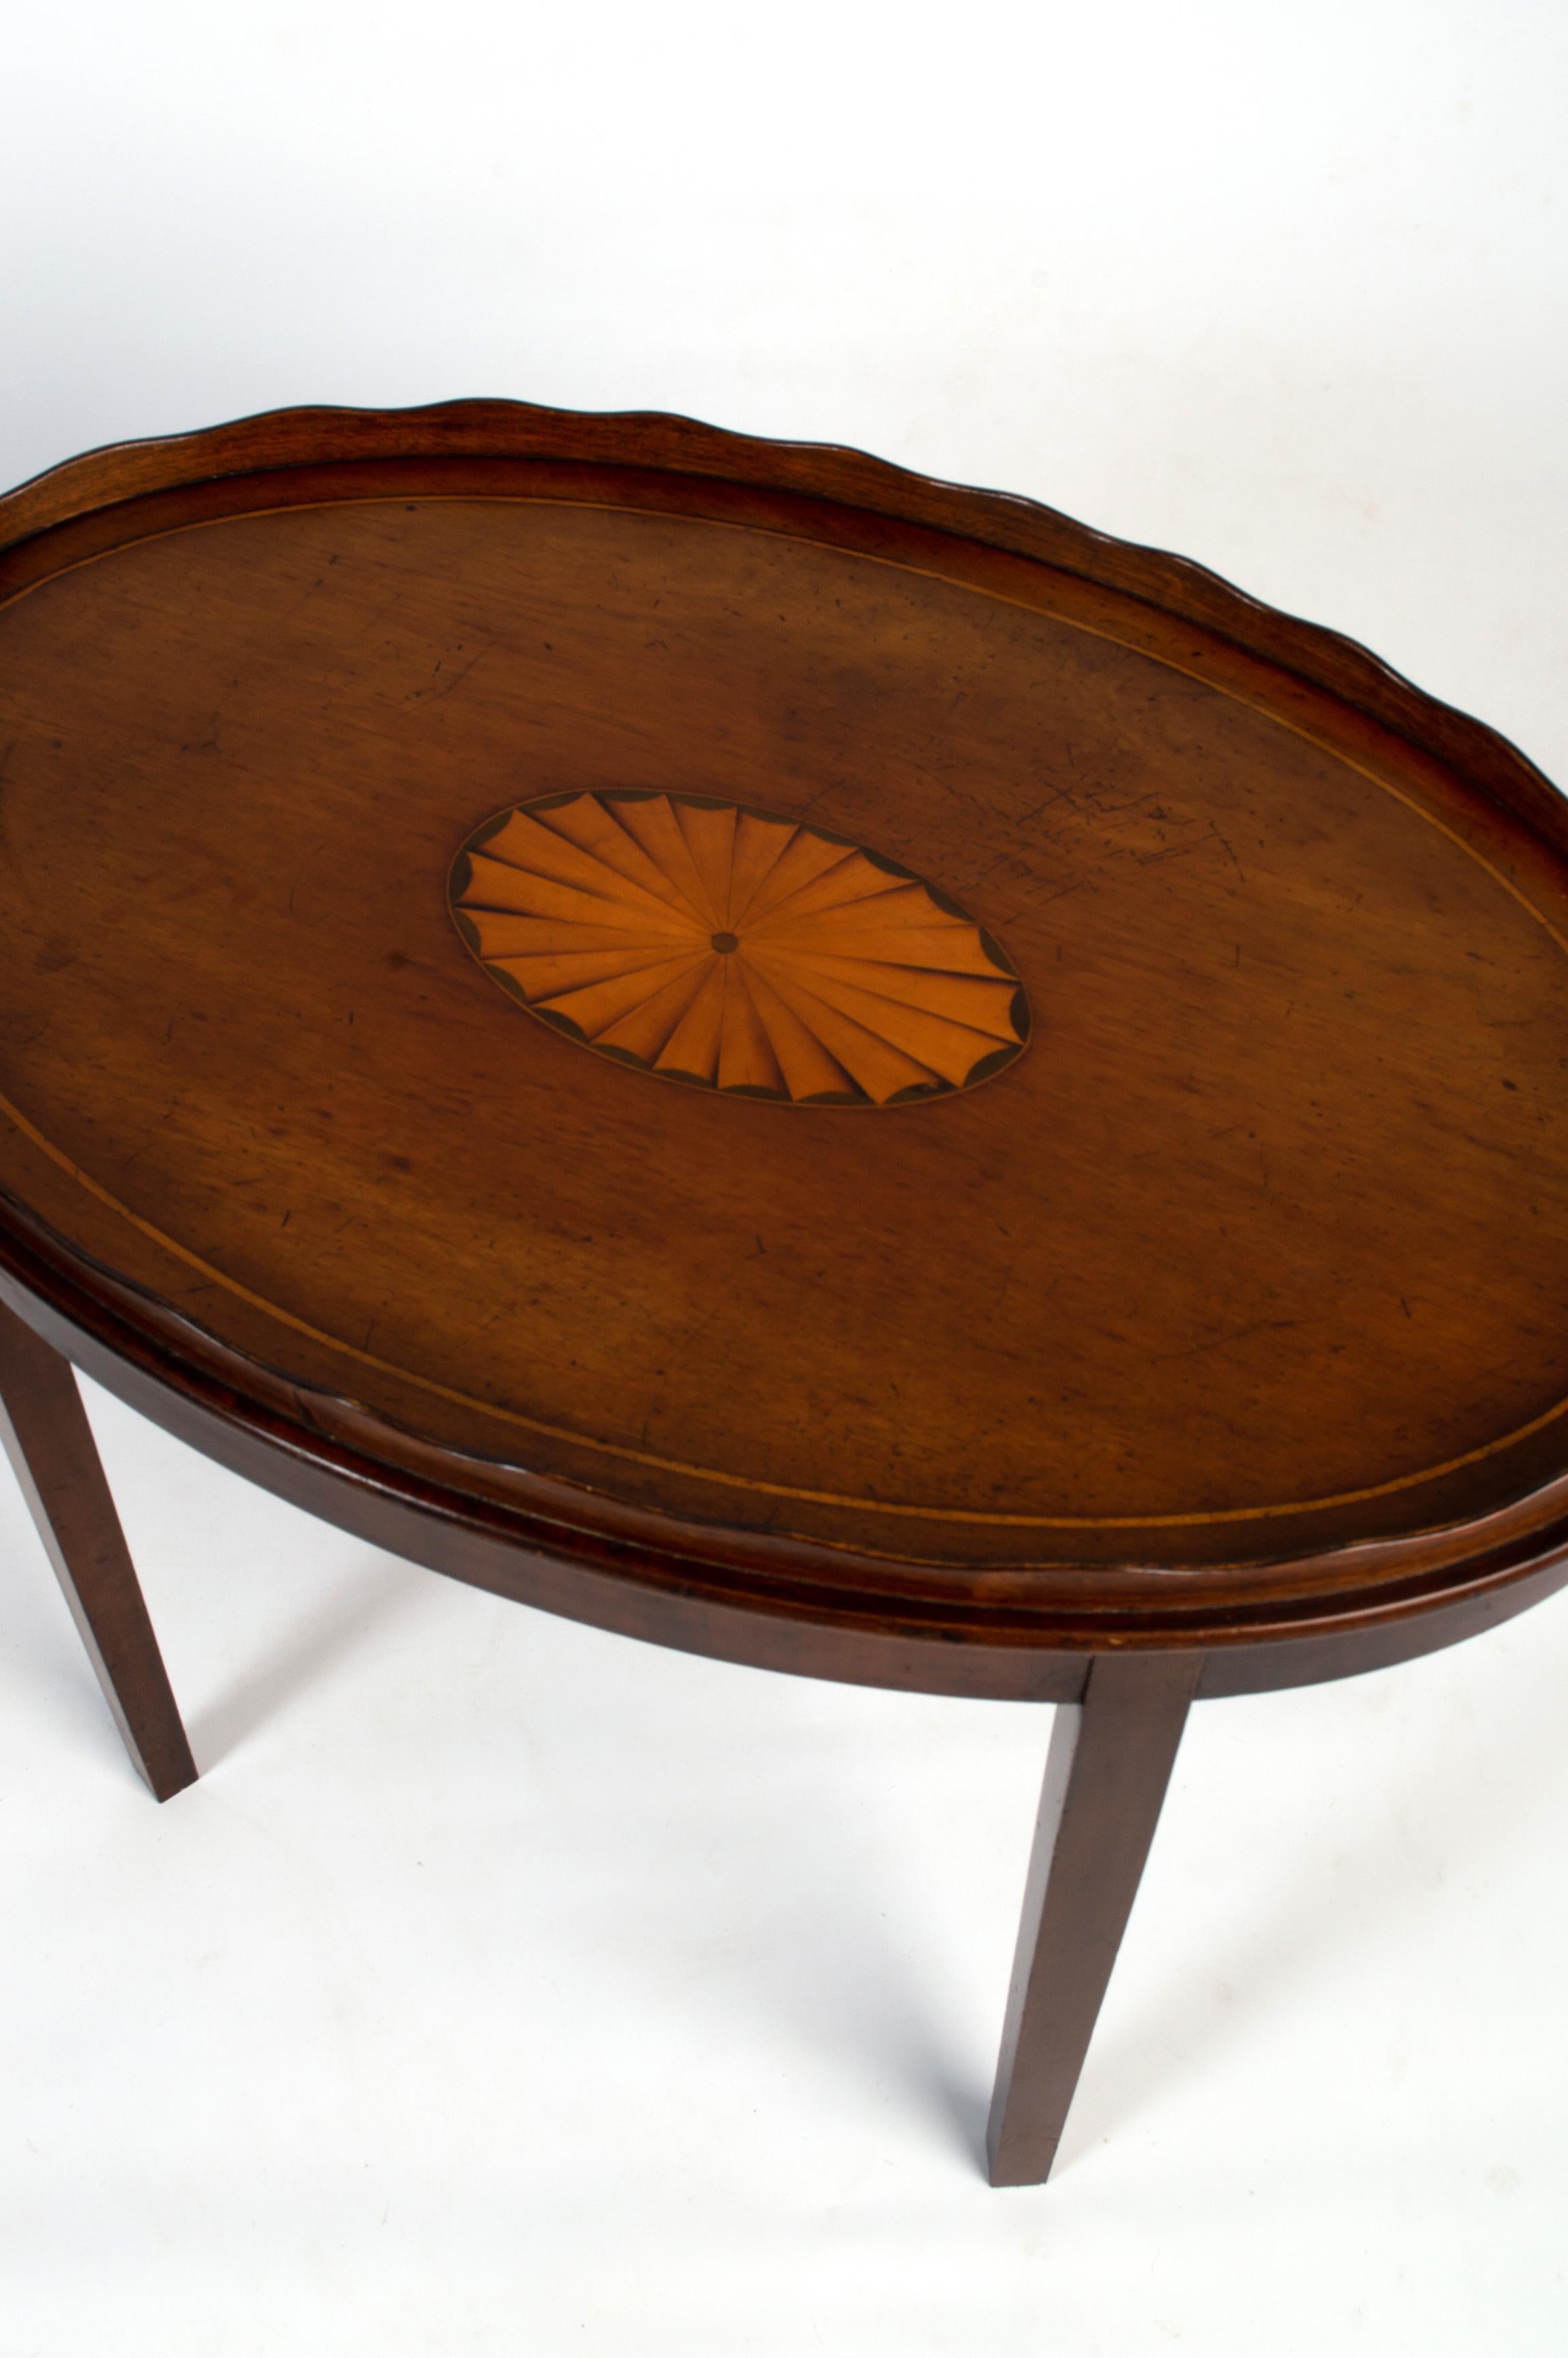 Brass Antique English 19th Century Sheraton Revival Mahogany Tray Table For Sale